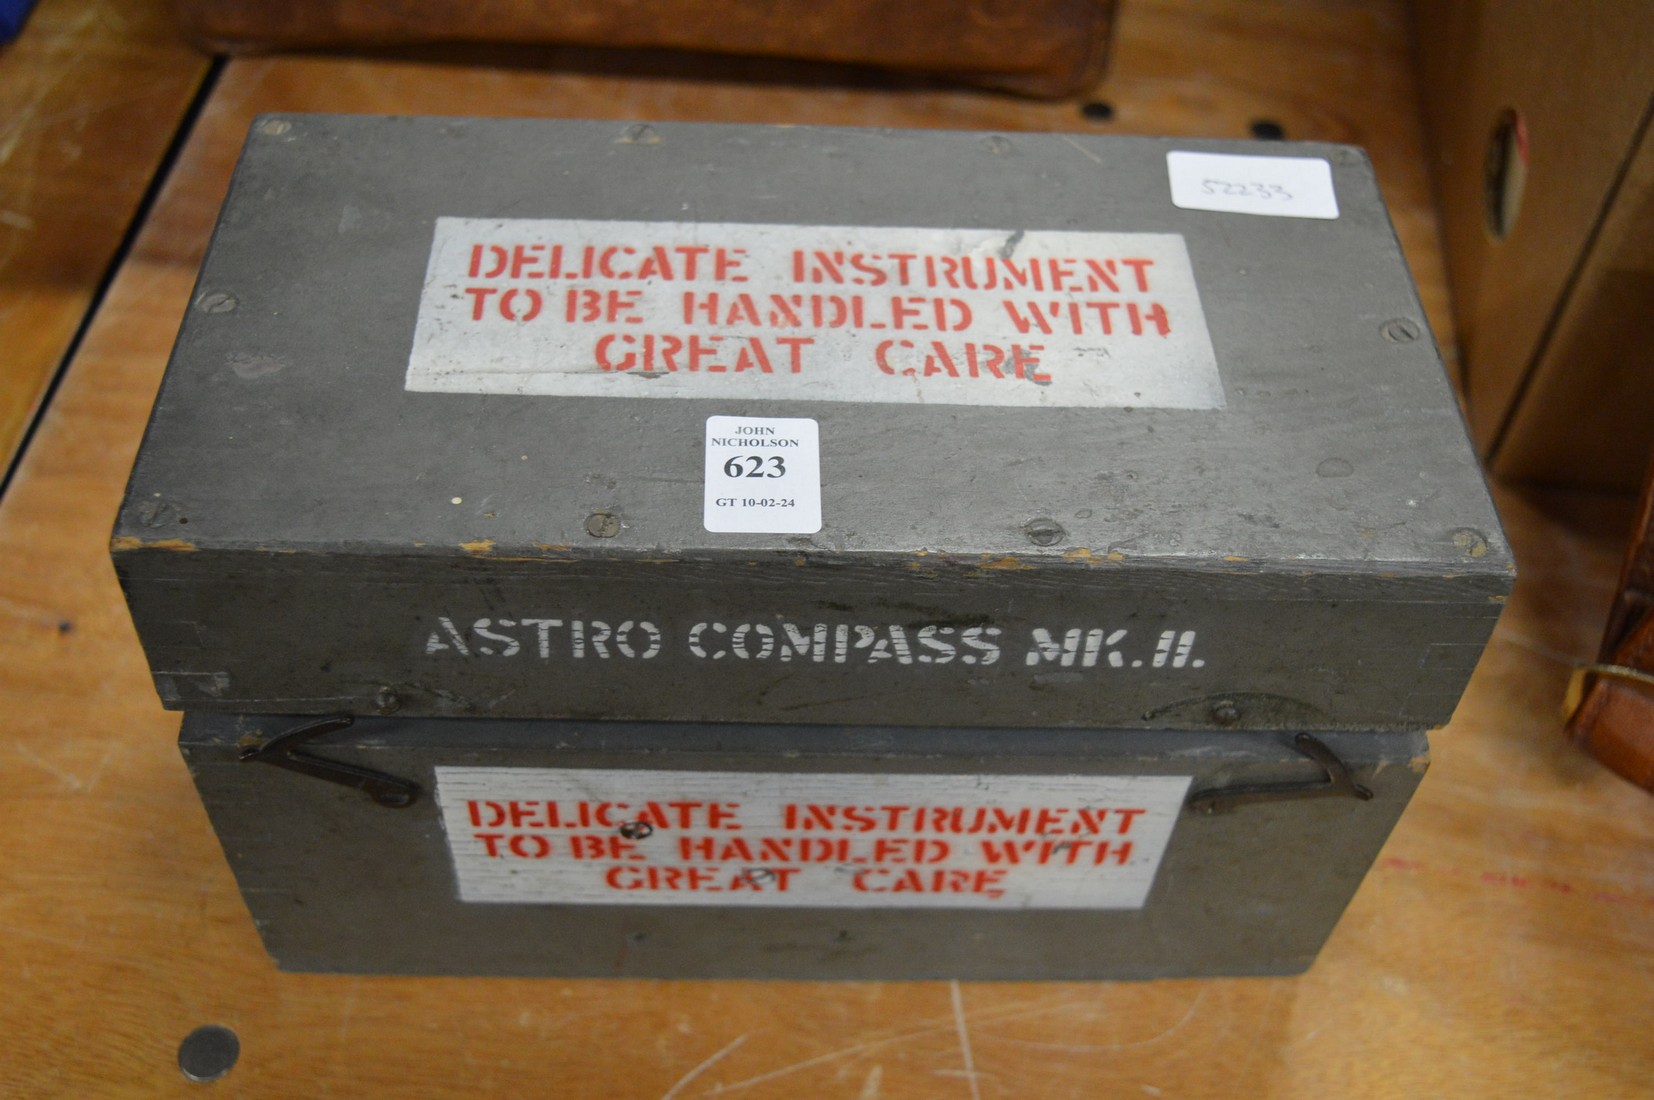 A boxed Astro compass MKII.